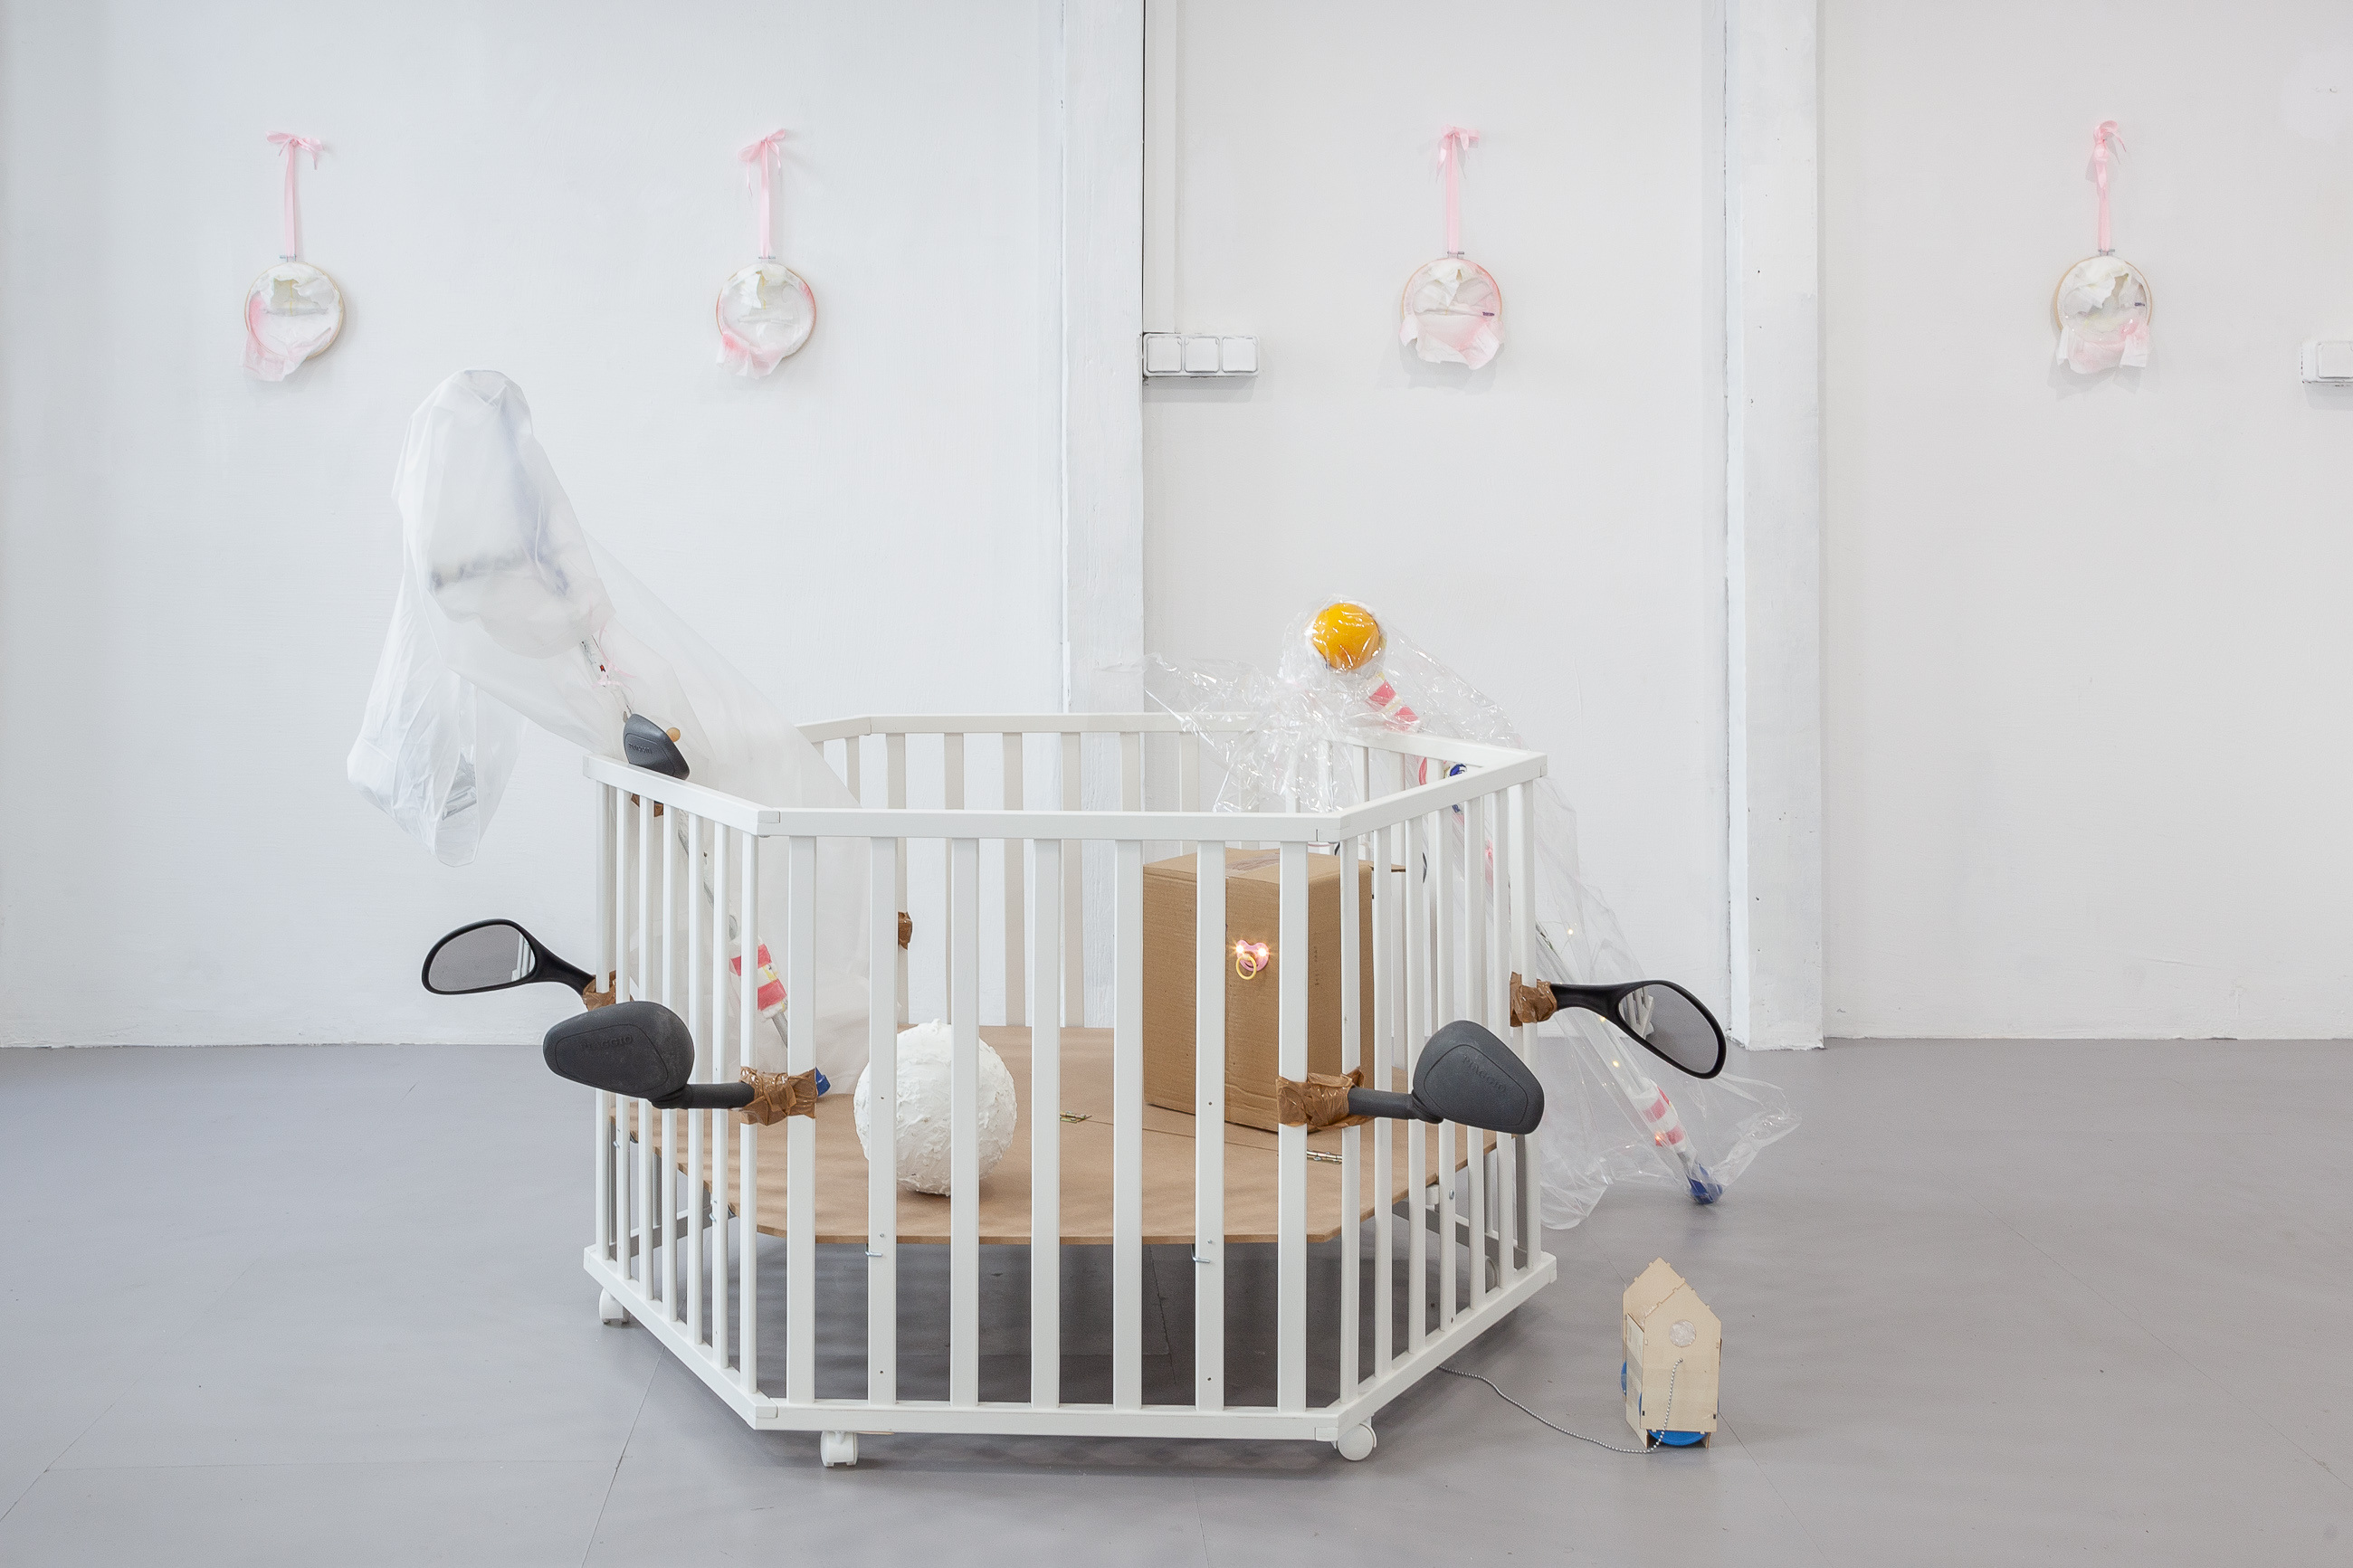 01. Paula Linke, 2022, Baby Shower City, exhibition view 01, Suzie Shride